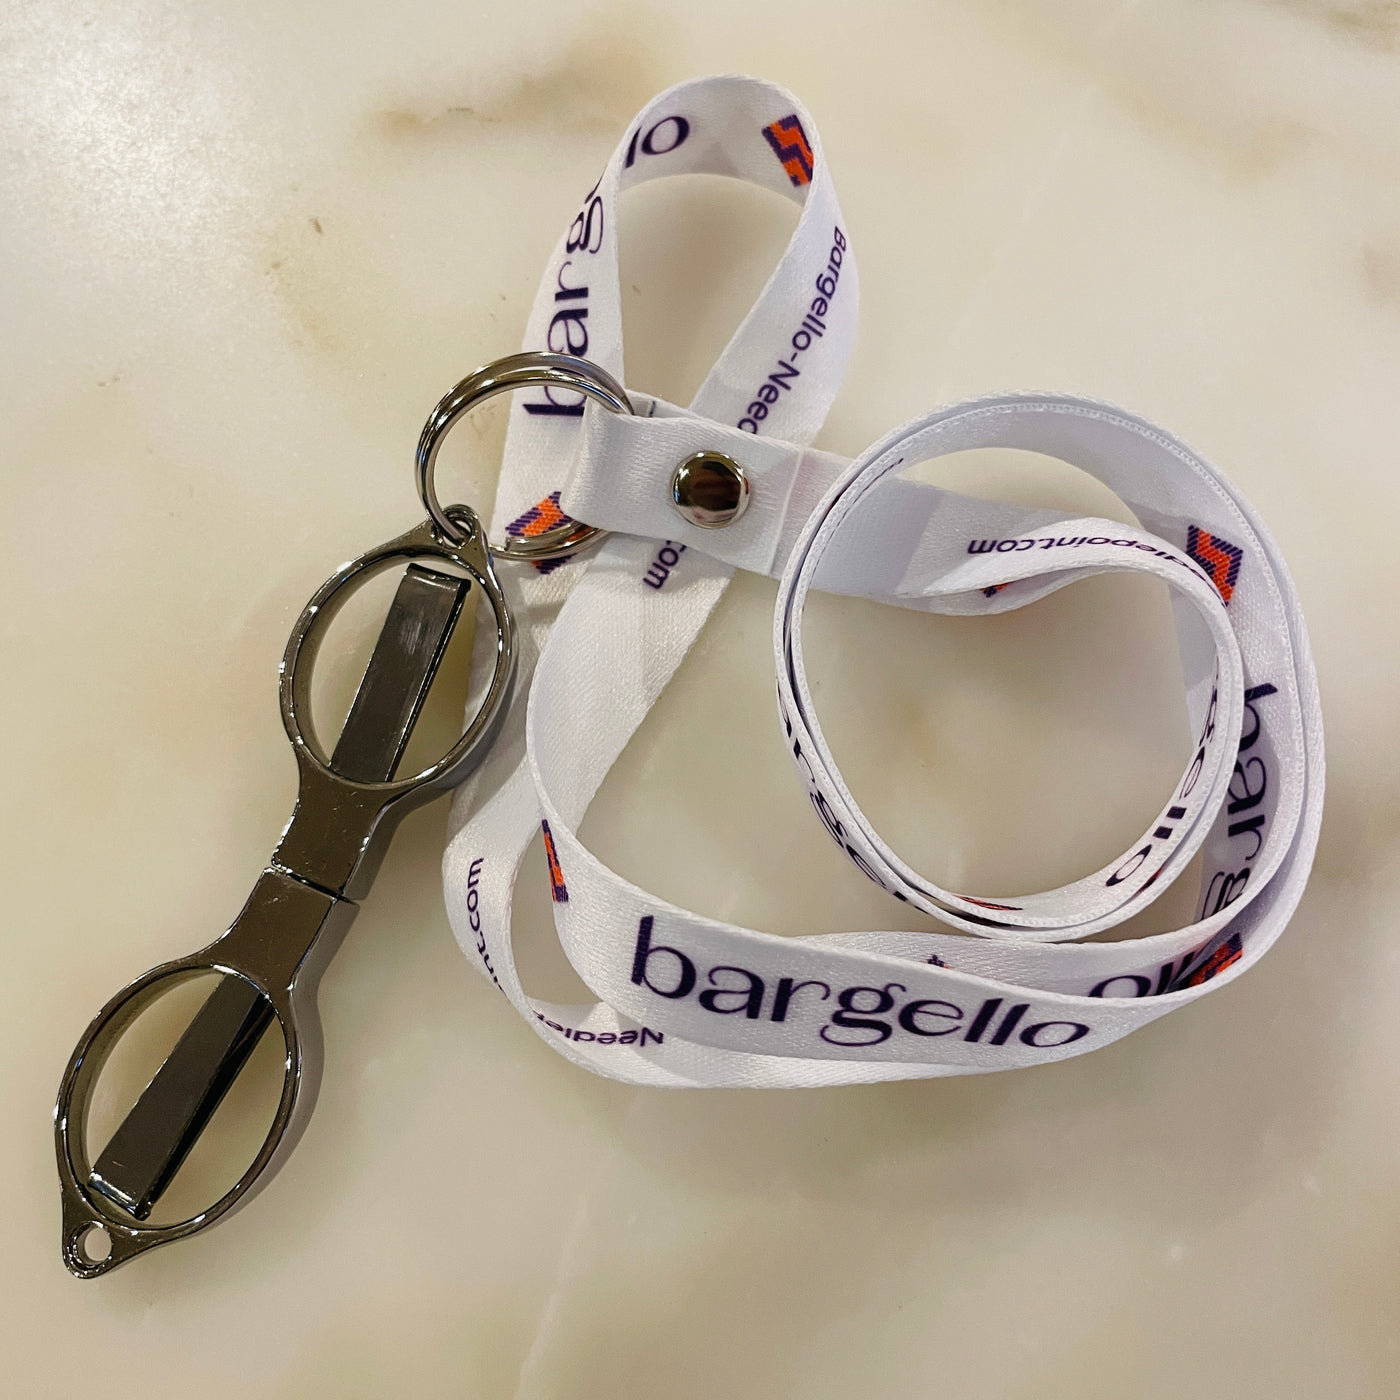 Folding Scissors on Bargello Needlepoint Lanyard